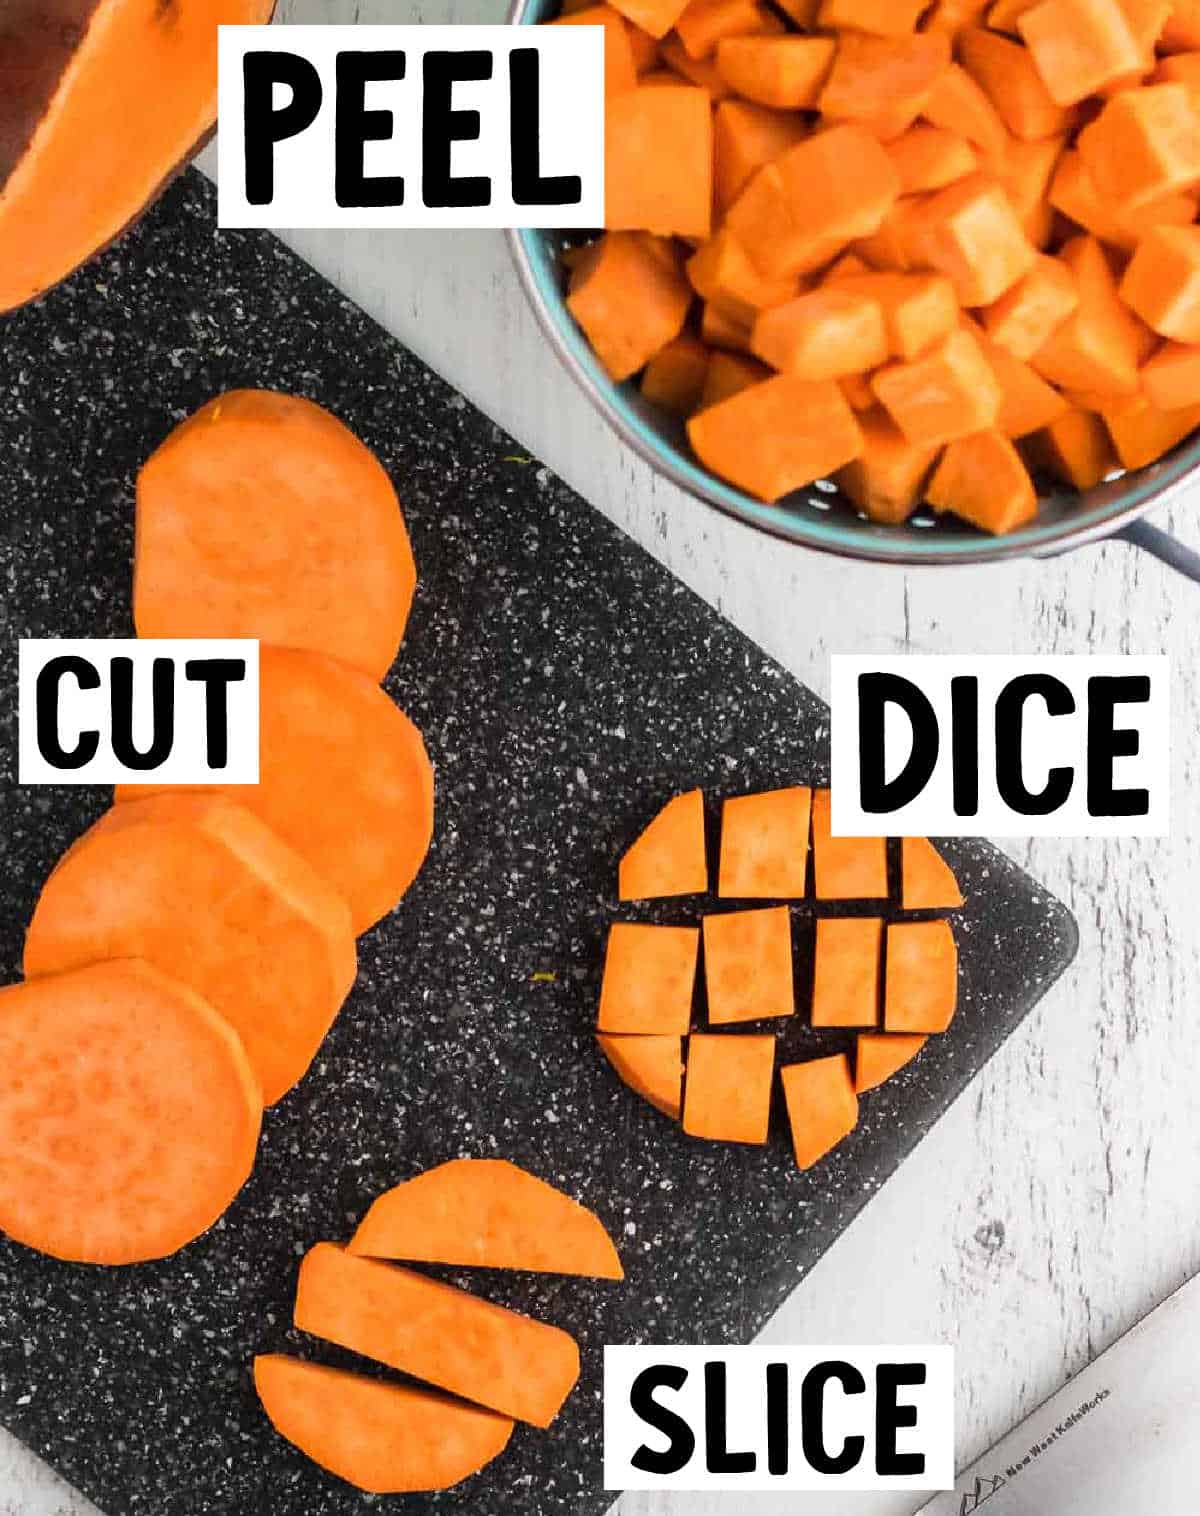 Sweet potatoes: peeled, cut, sliced, and diced.